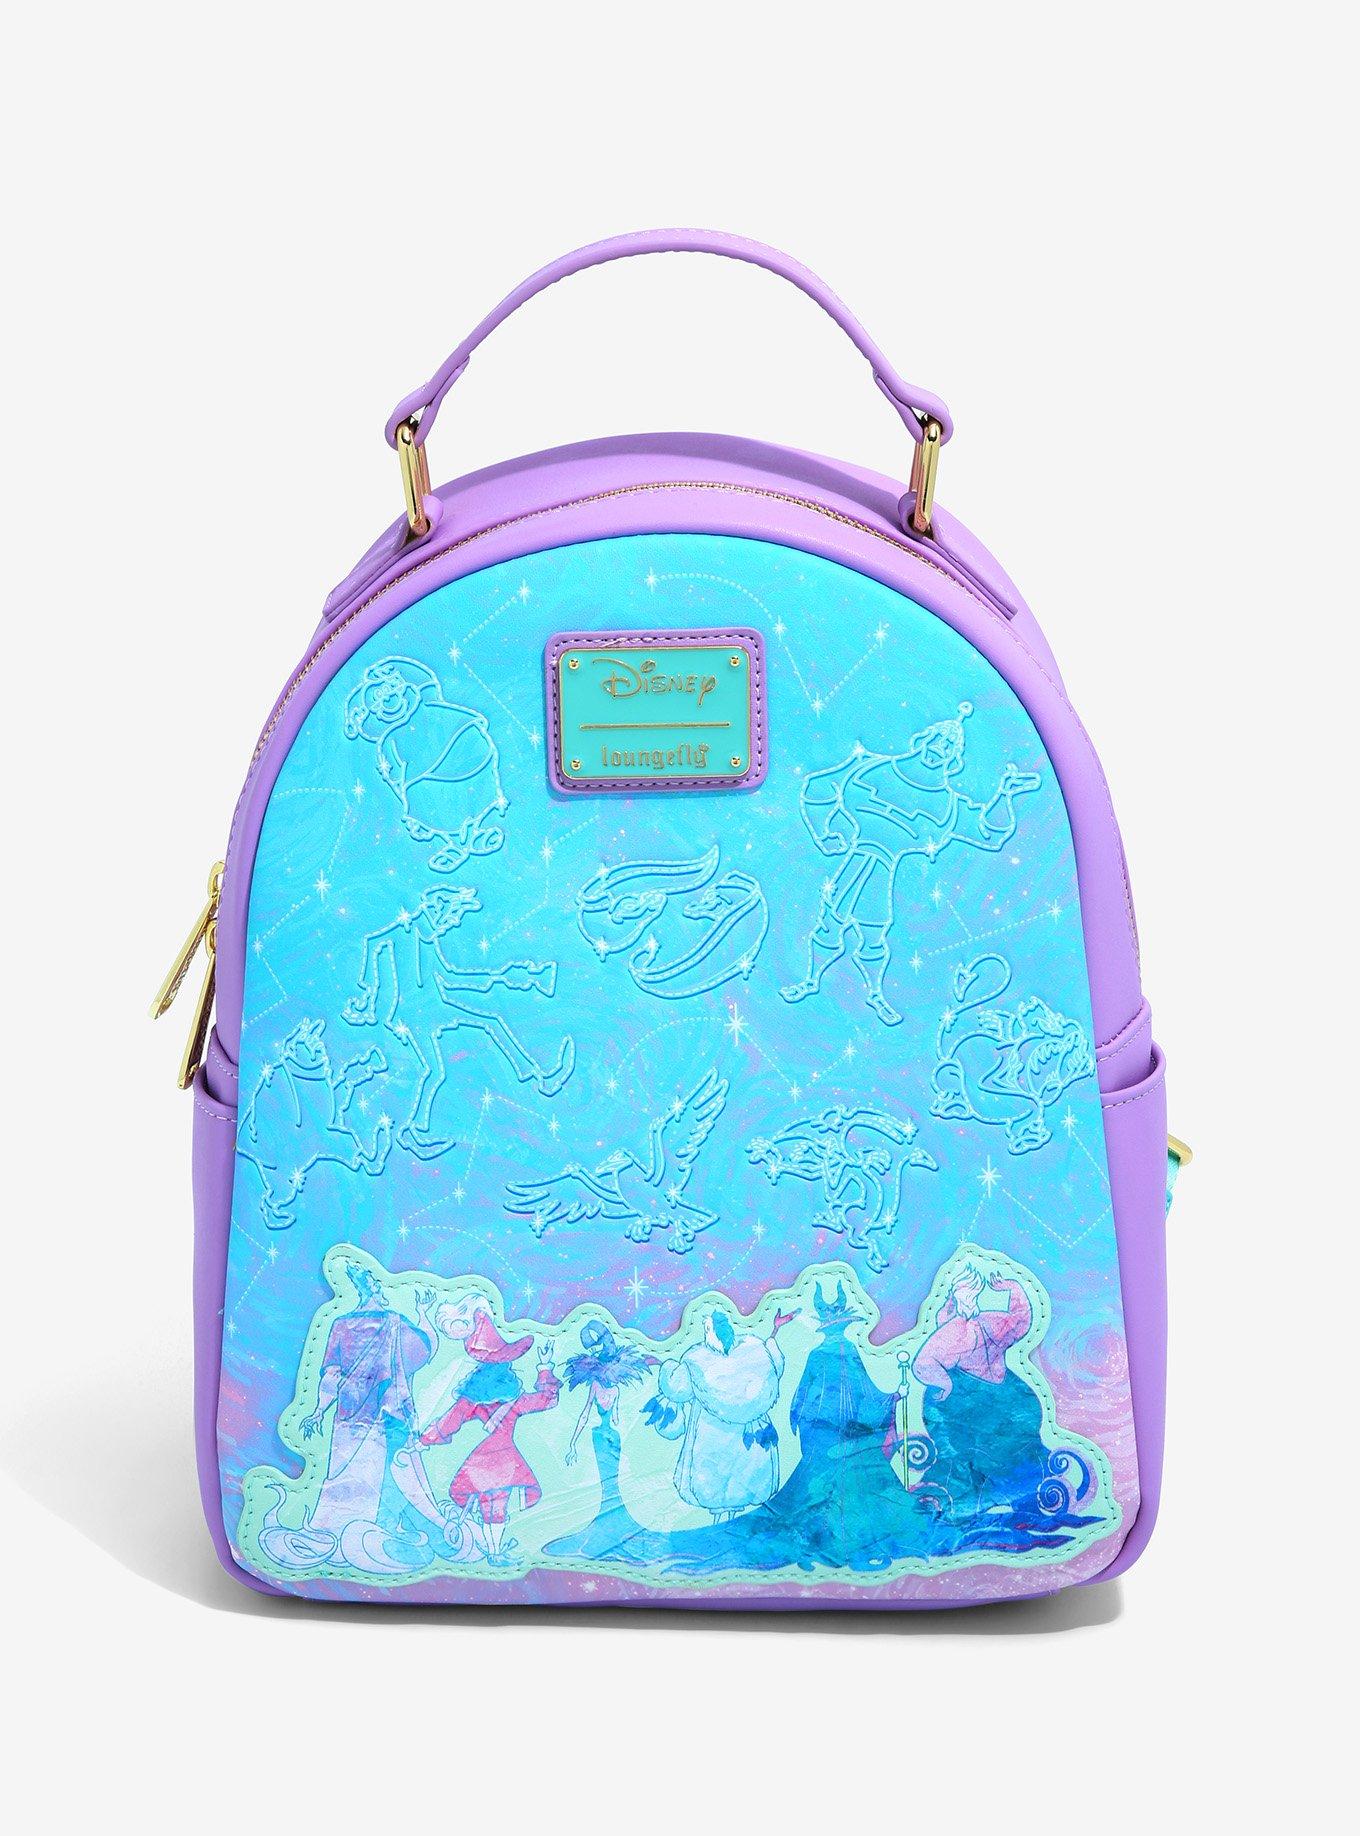 DISNEY - Princess Sidekick - Mini Backpack Loungefly Excl. Edition :  : Bag Loungefly DISNEY